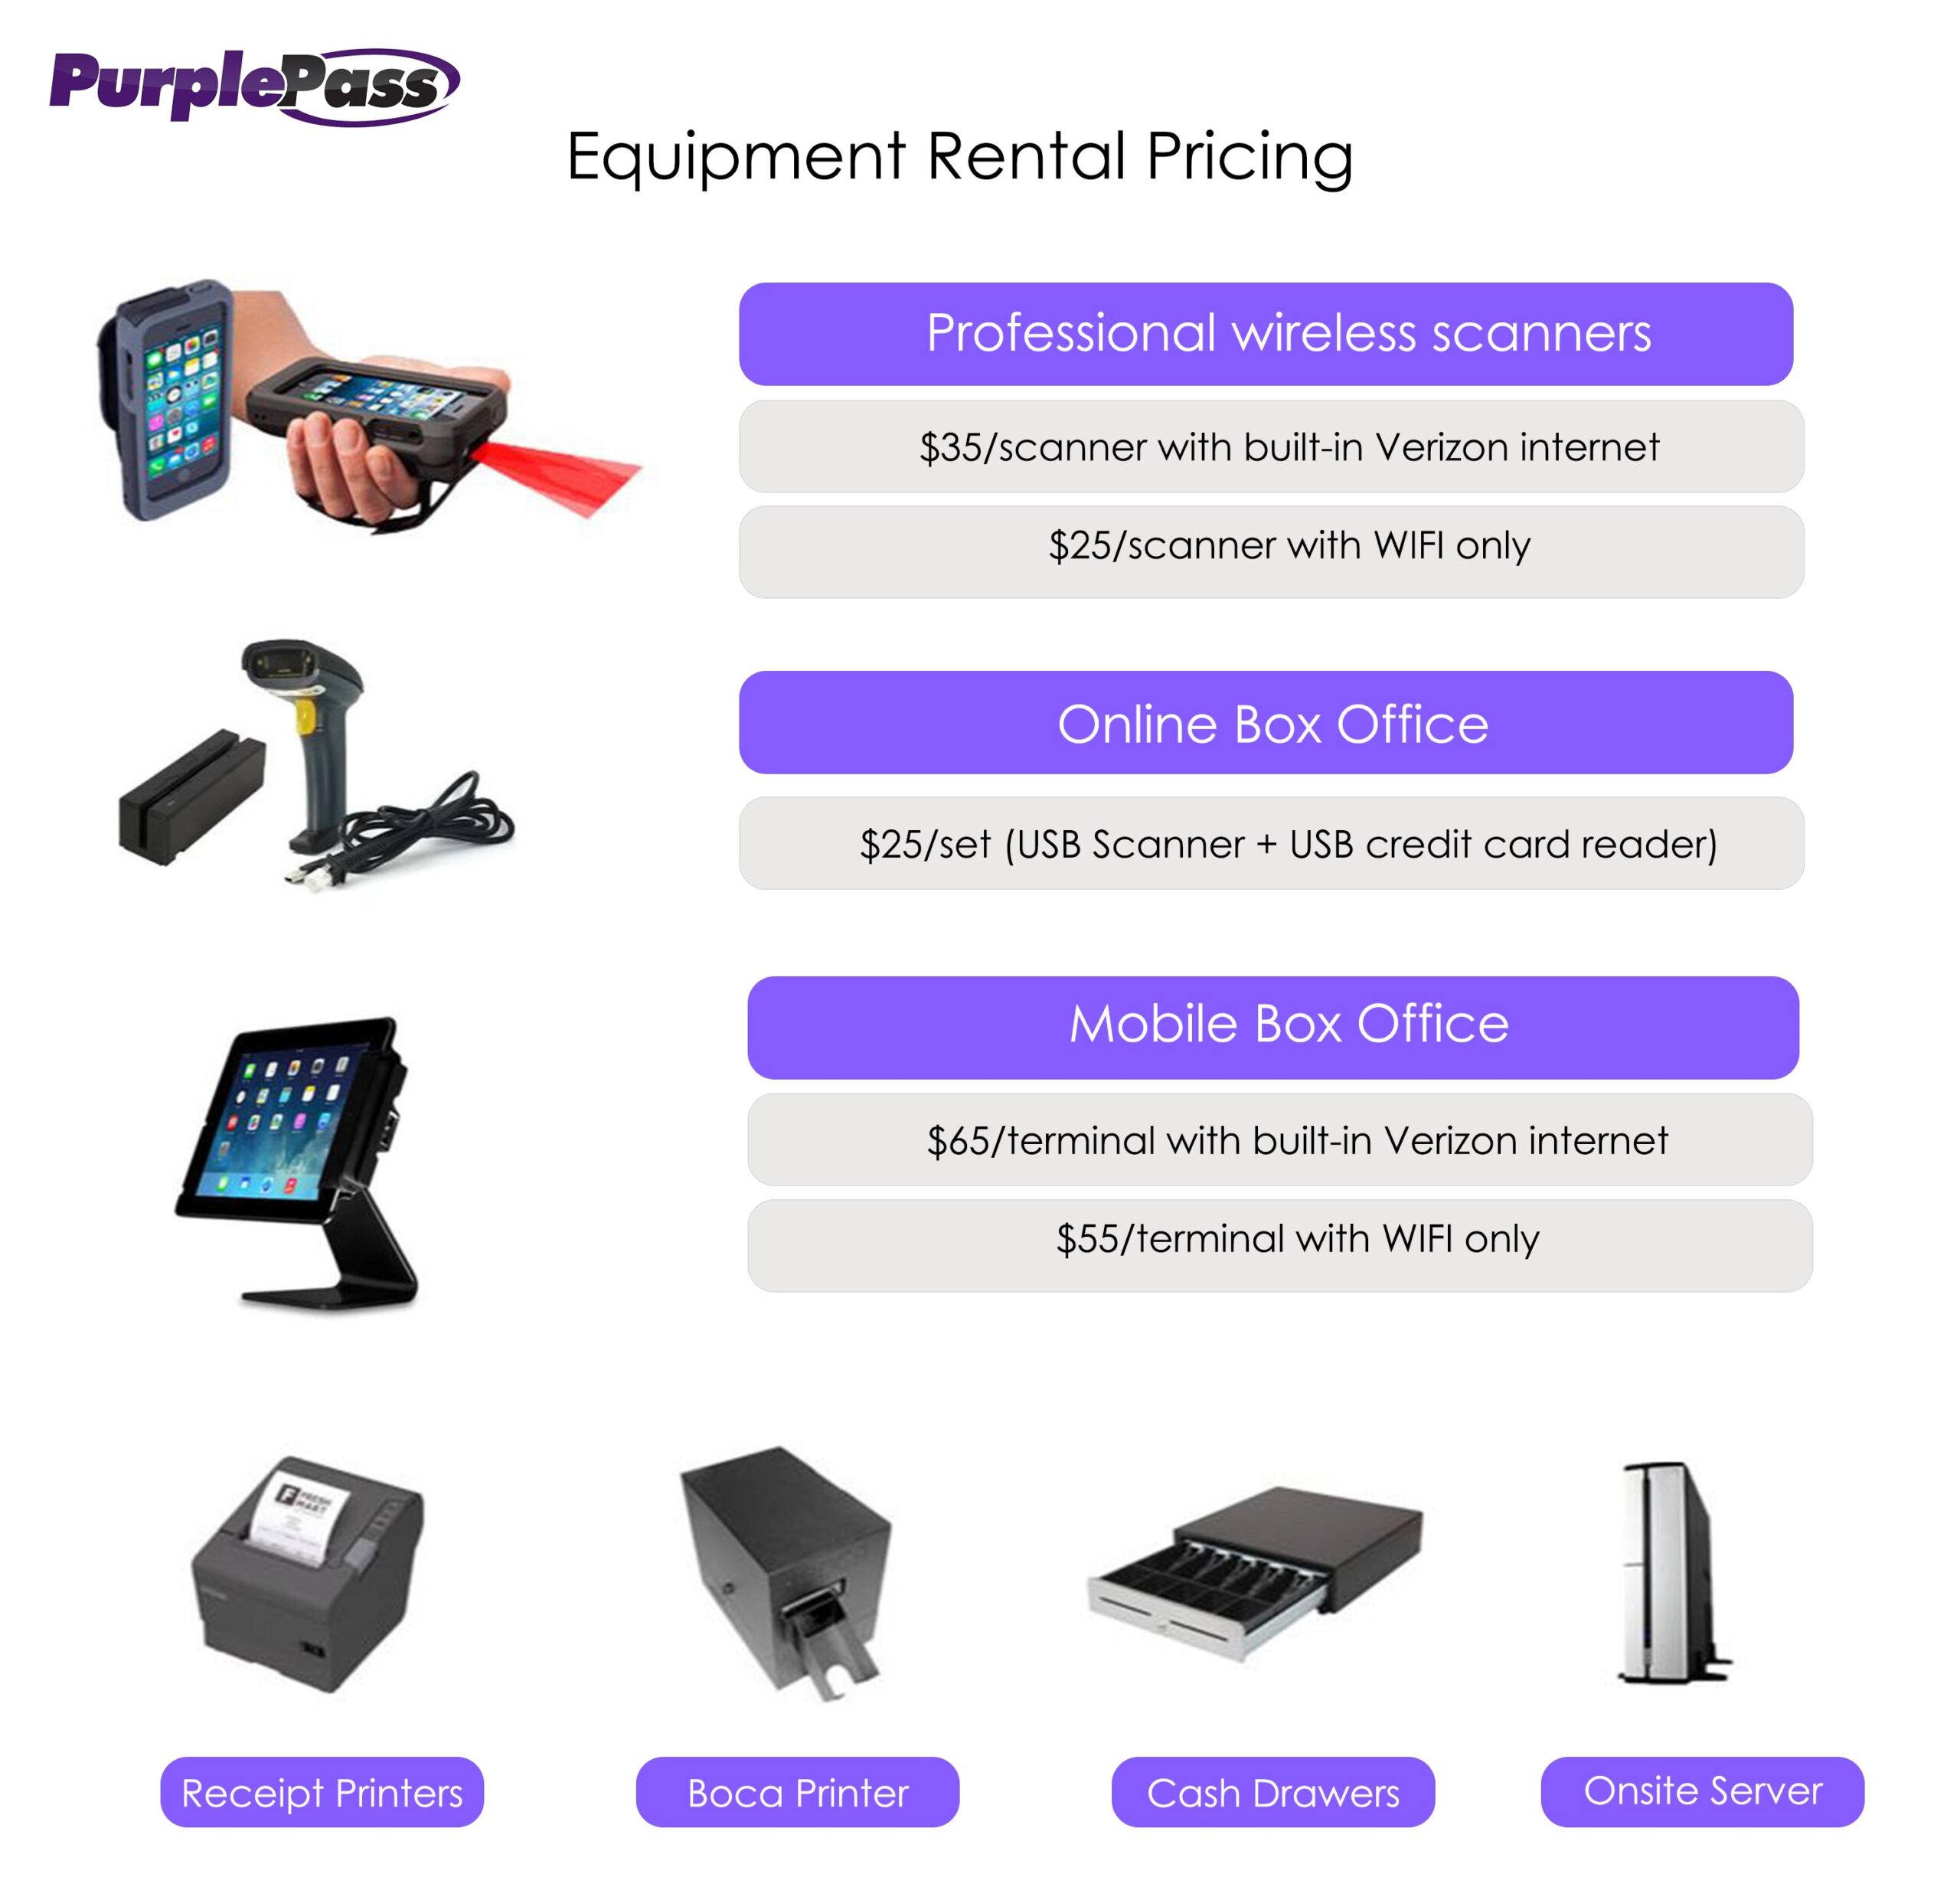 Purplepass equipment rental pricing